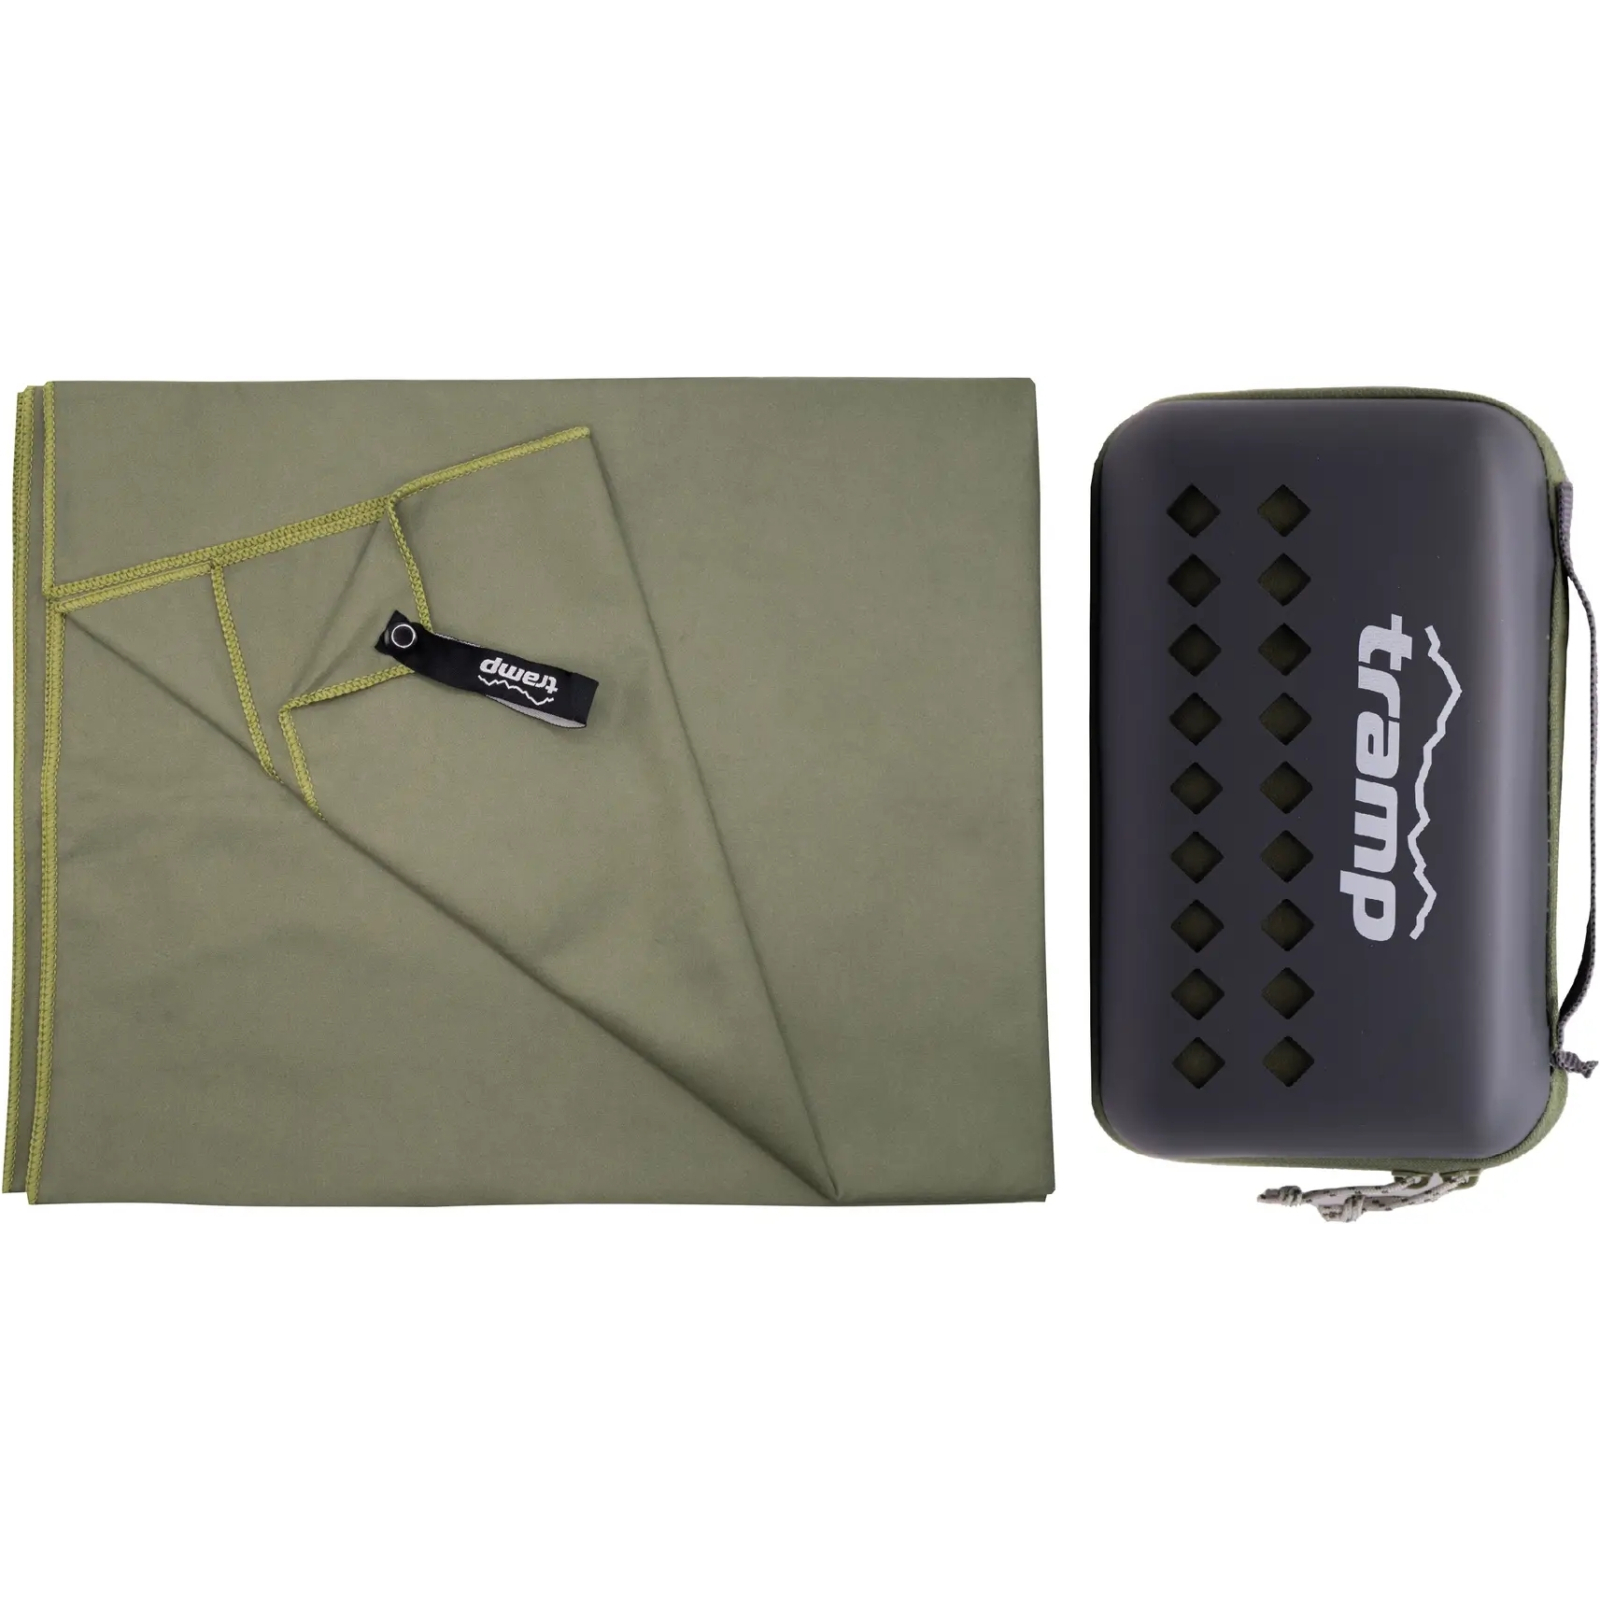 Рушник Tramp з мікрофібри в чохлі Pocket Towel 50х100 M Army green (UTRA-161-M-army-green)